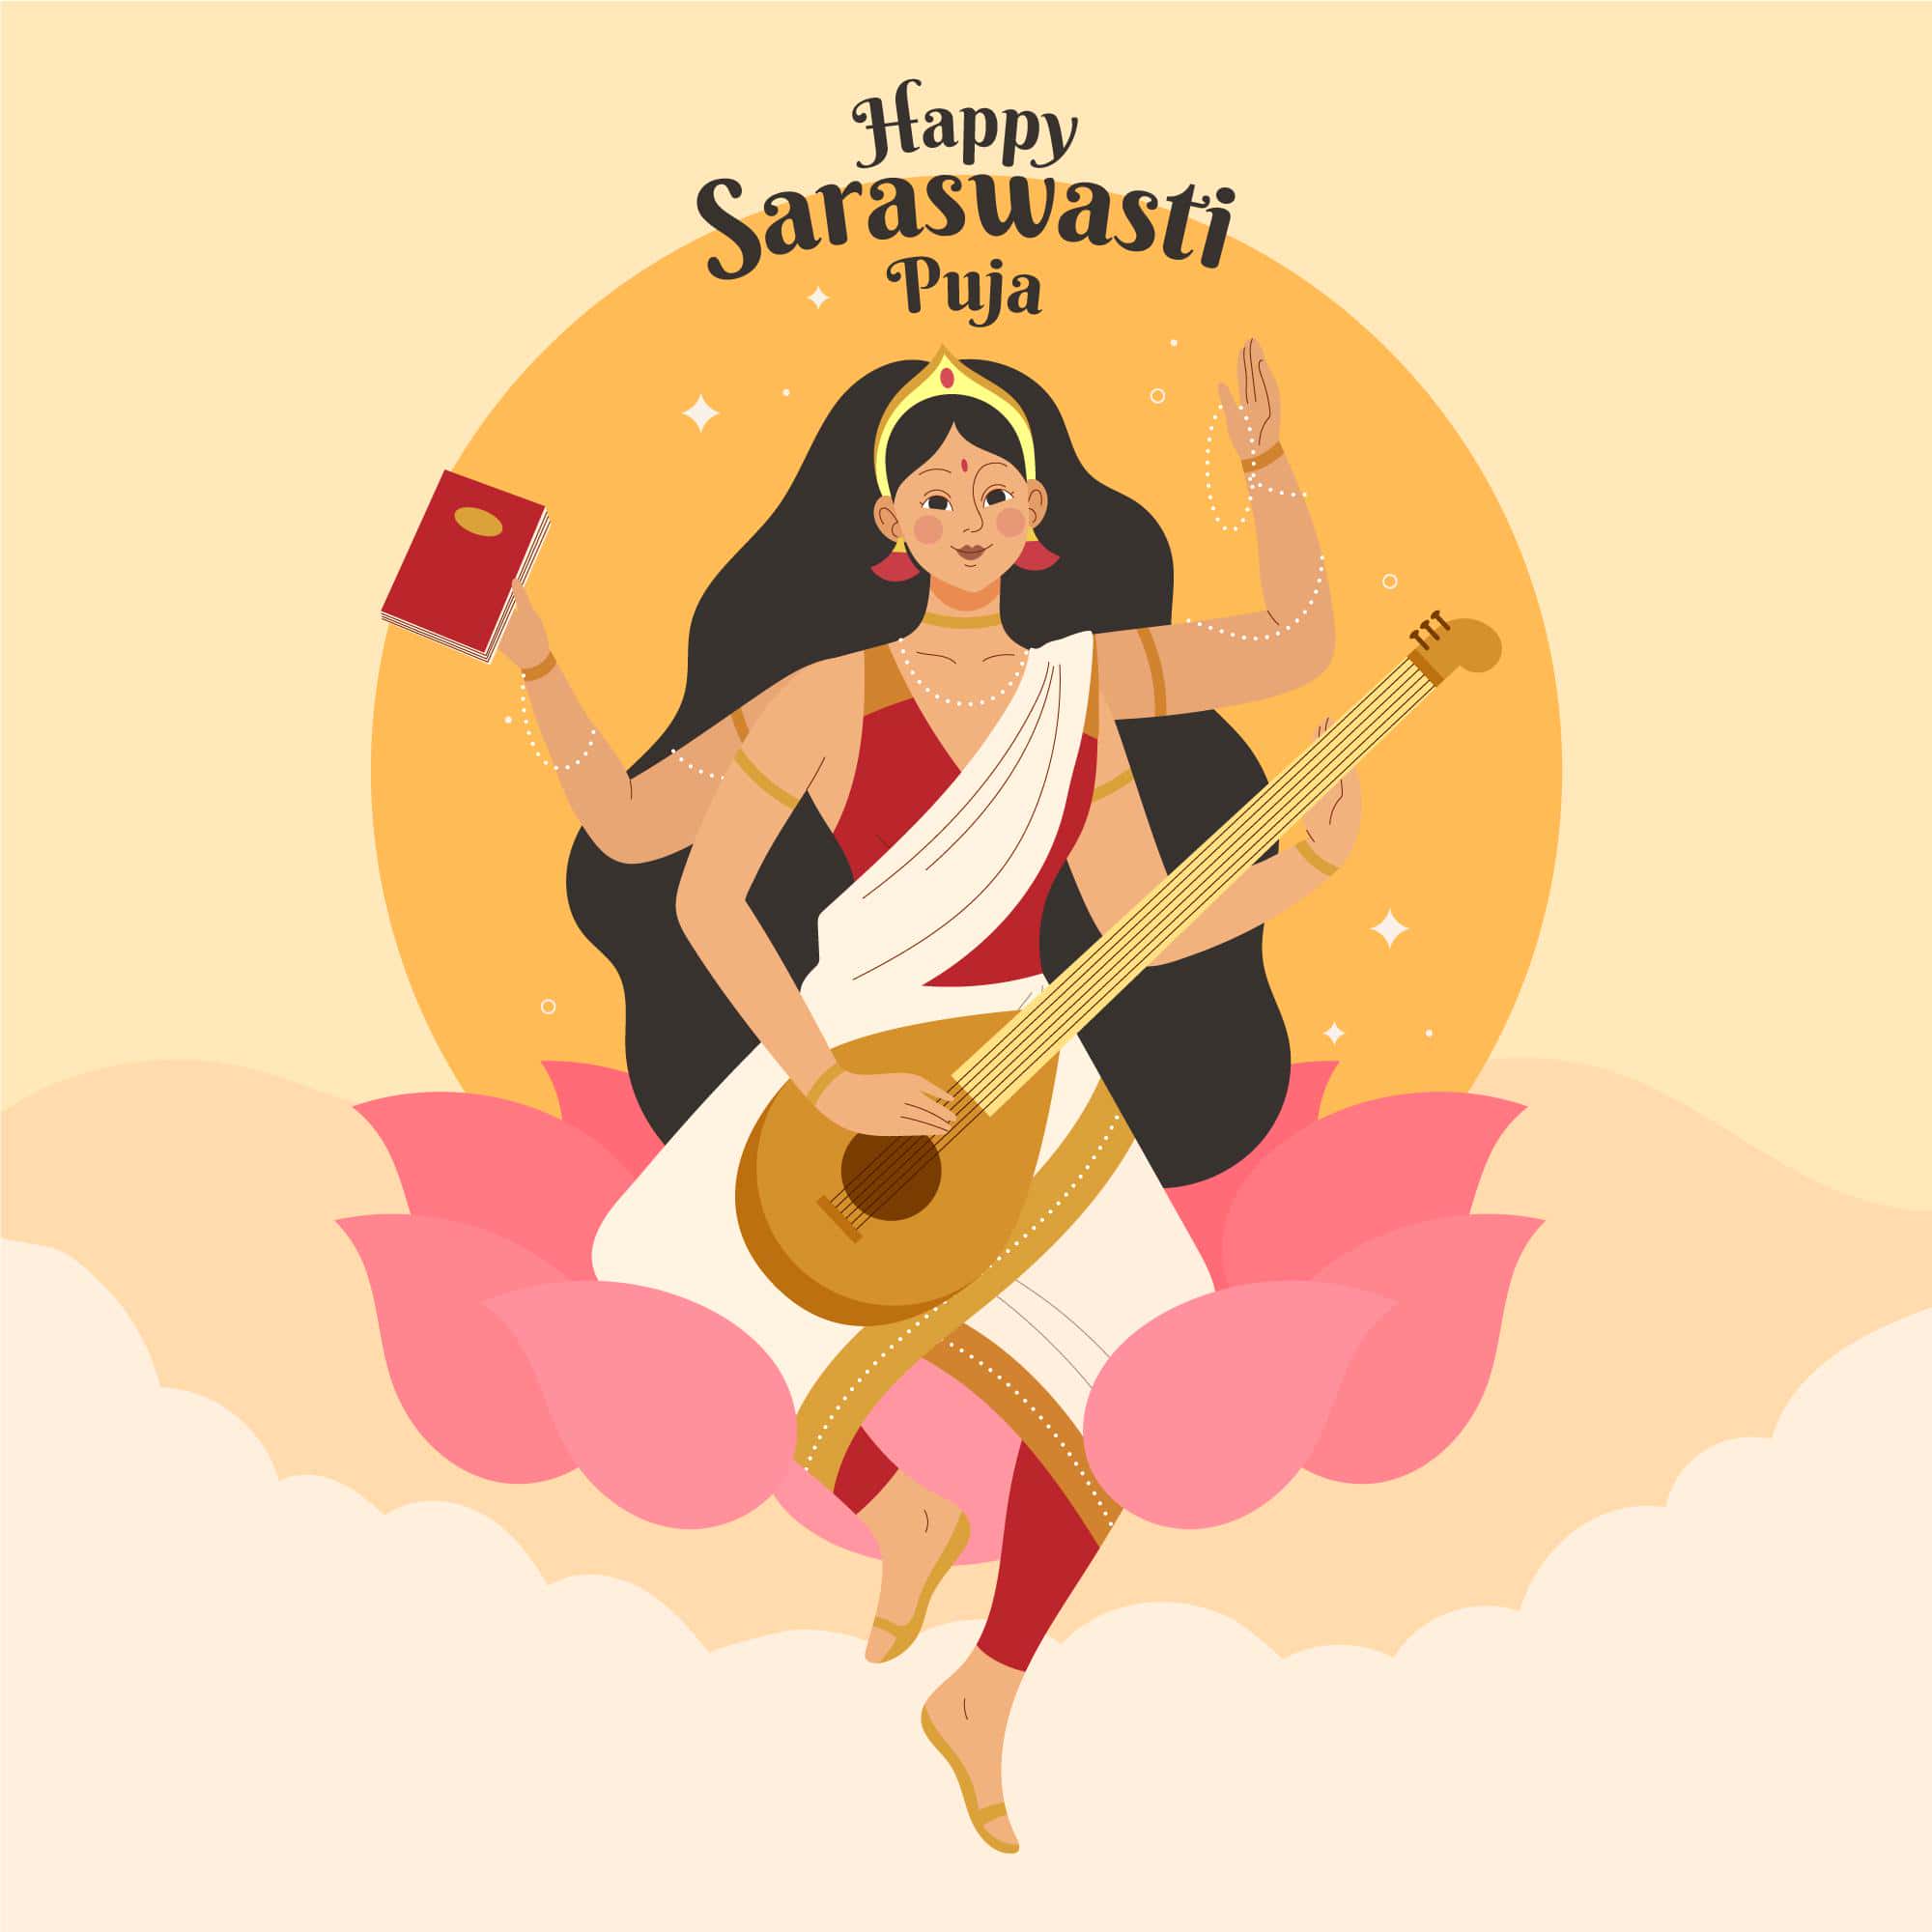 Happy Saraswati Puja Image